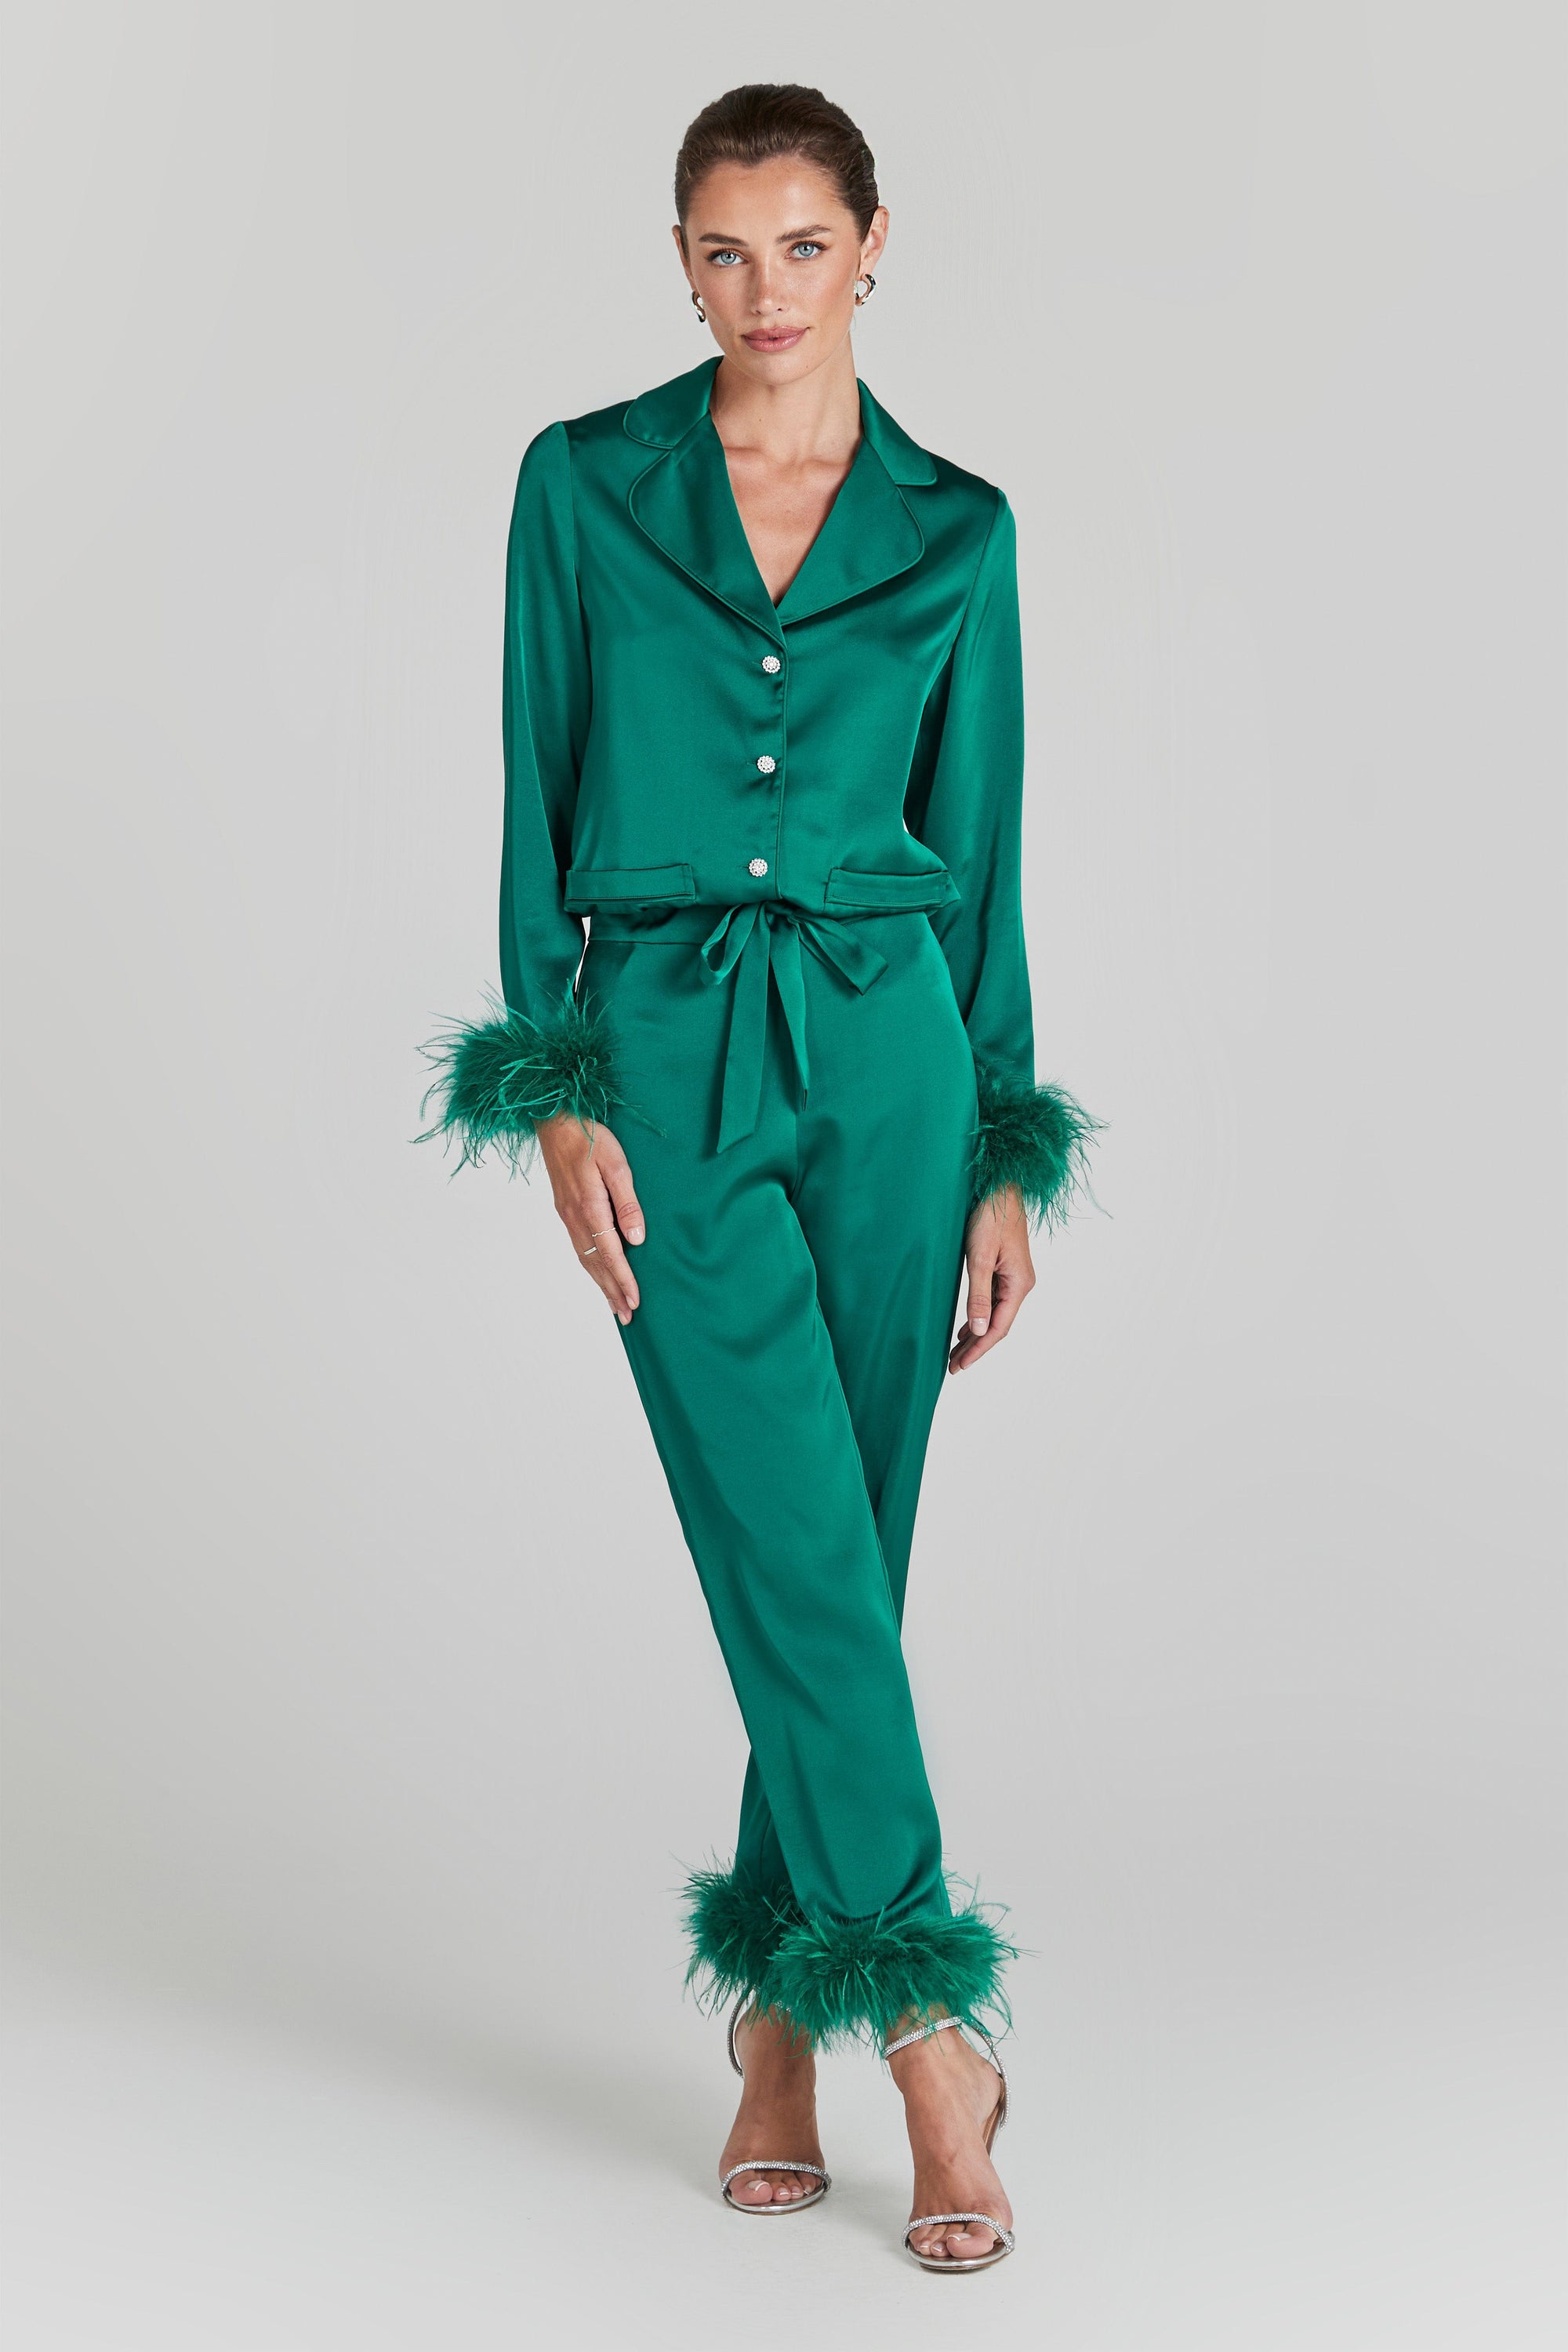 Green Satin Pajamas, Green Feather Pajamas